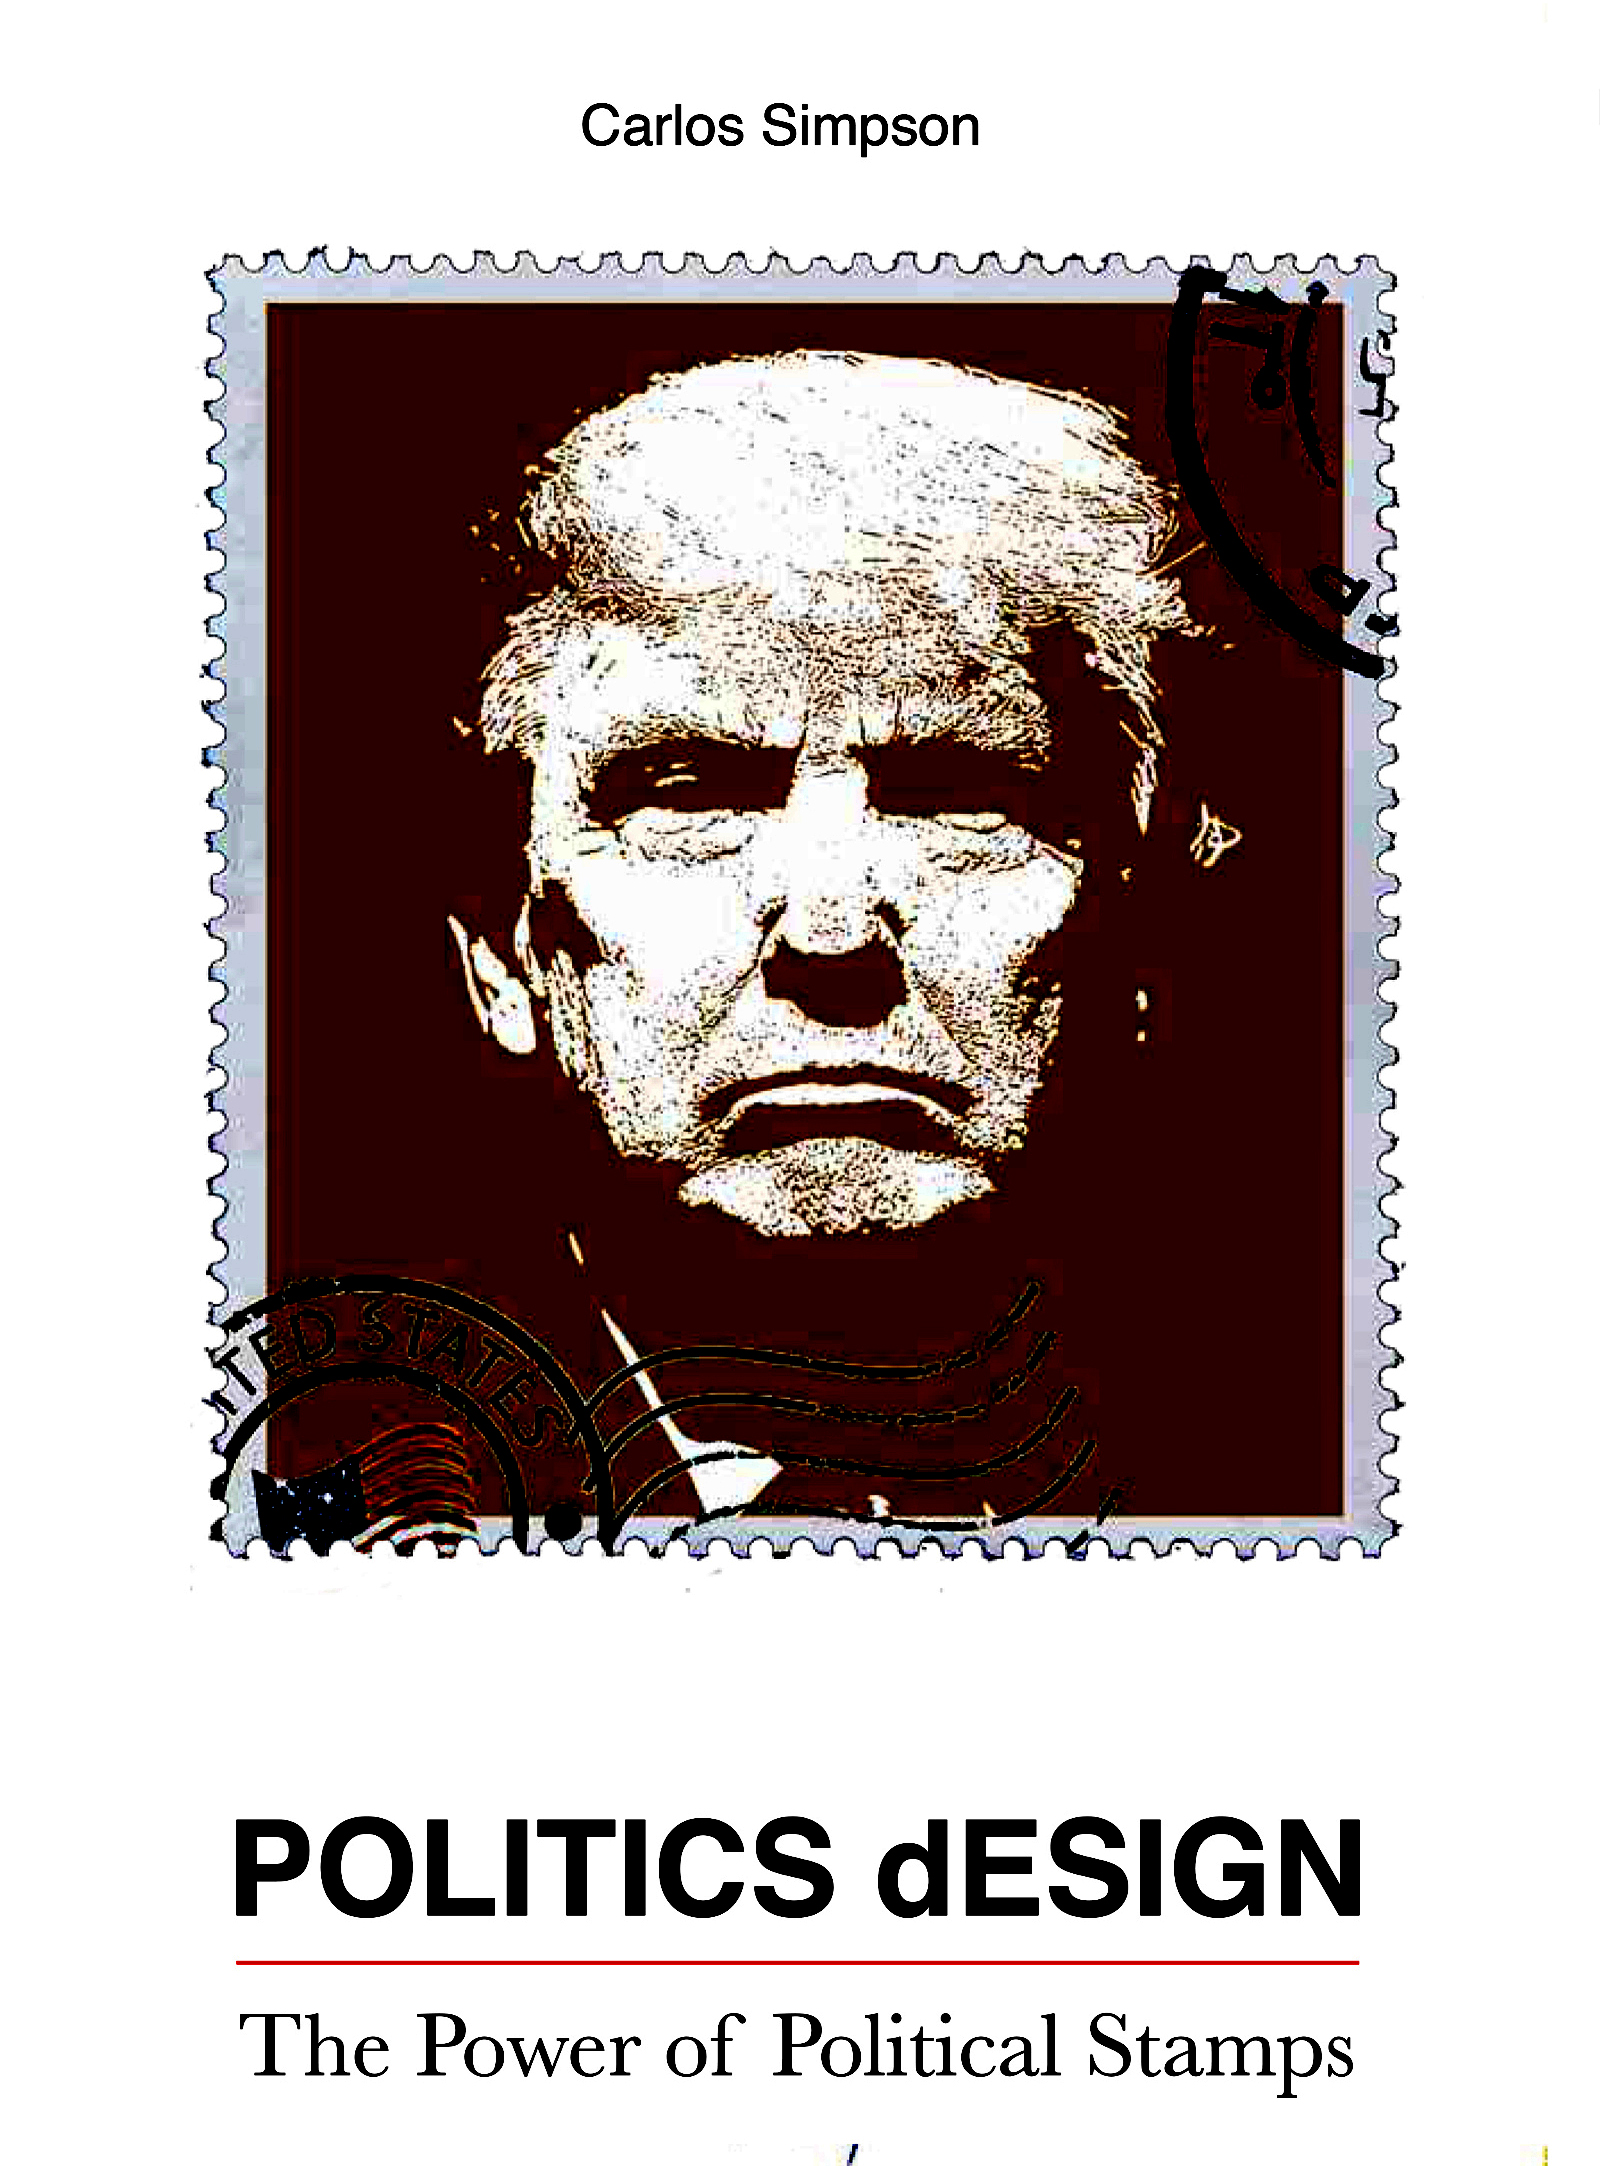 Rich result on Google when search for "Politics Design by Carlos Simpson Design Studio"